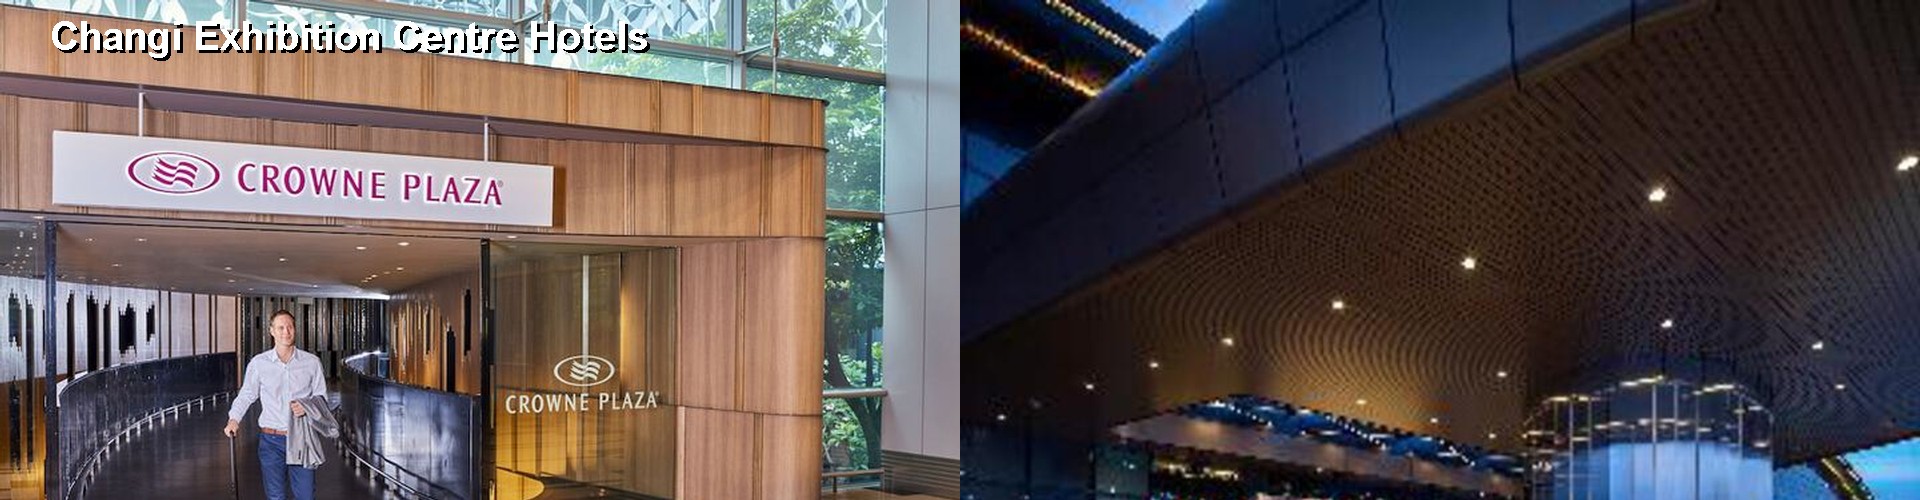 5 Best Hotels near Changi Exhibition Centre